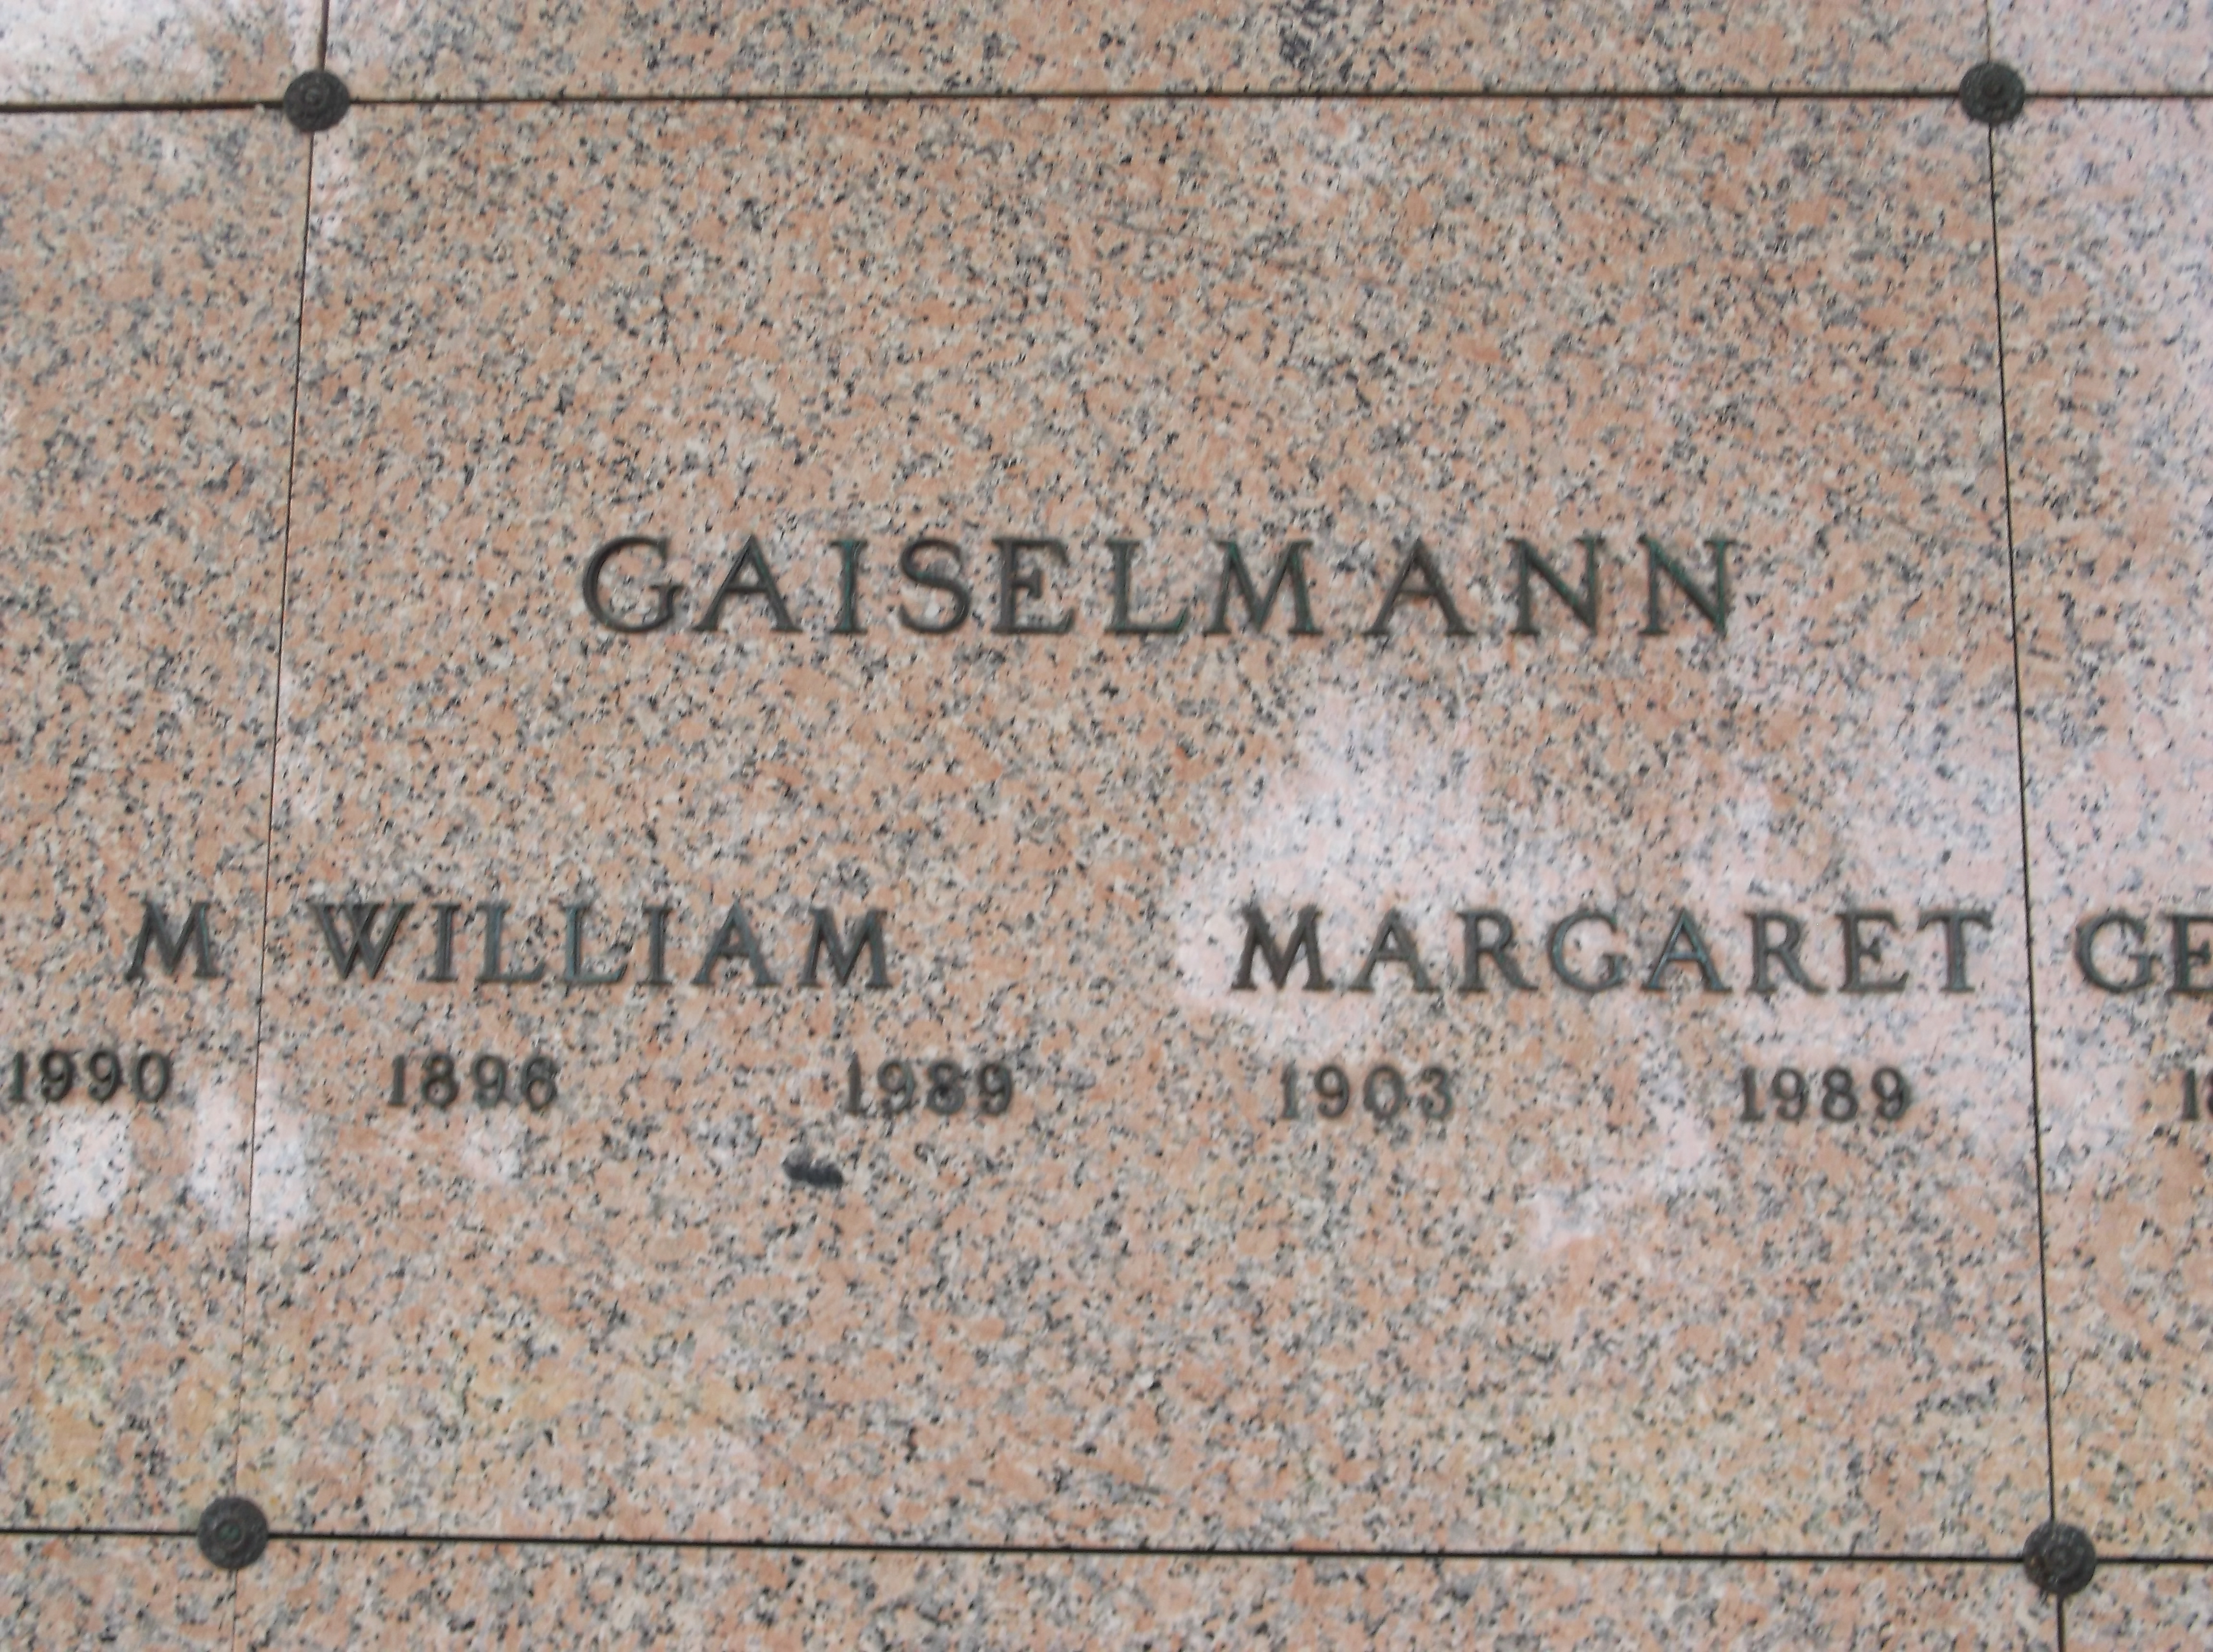 Margaret Gaiselmann